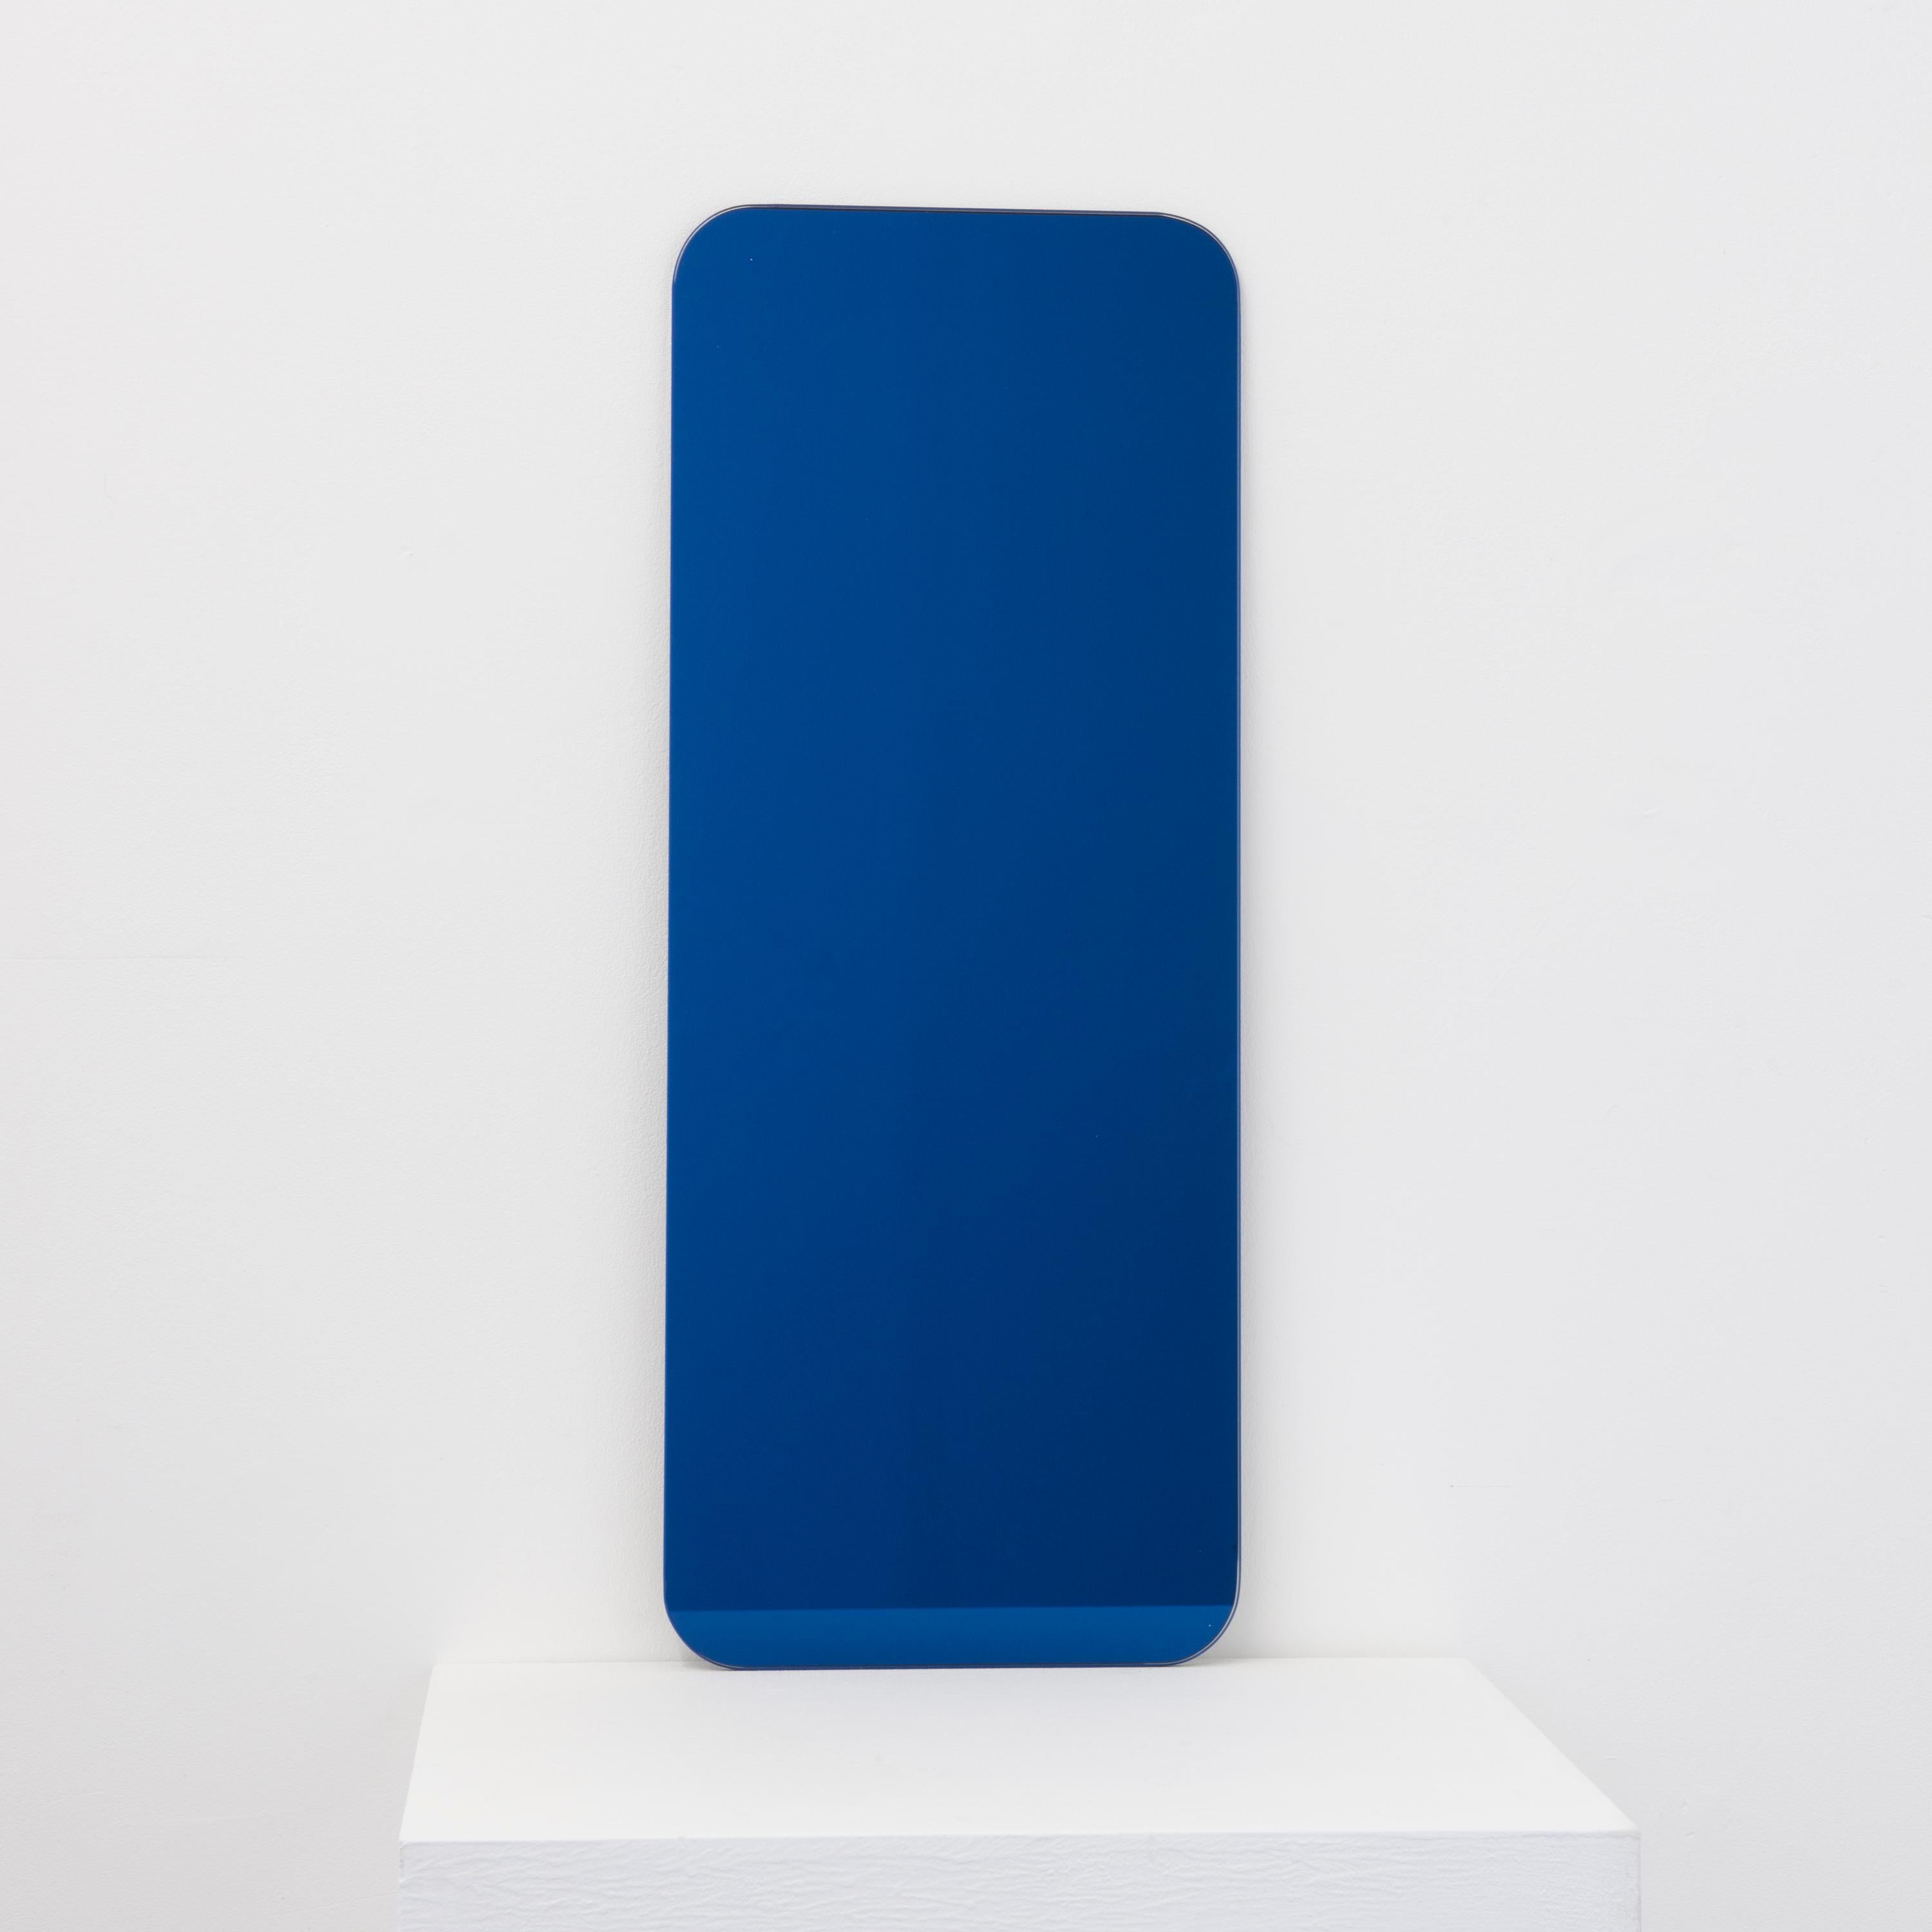 Quadris Blue Rectangular Frameless Contemporary Mirror Floating Effect, Small For Sale 1